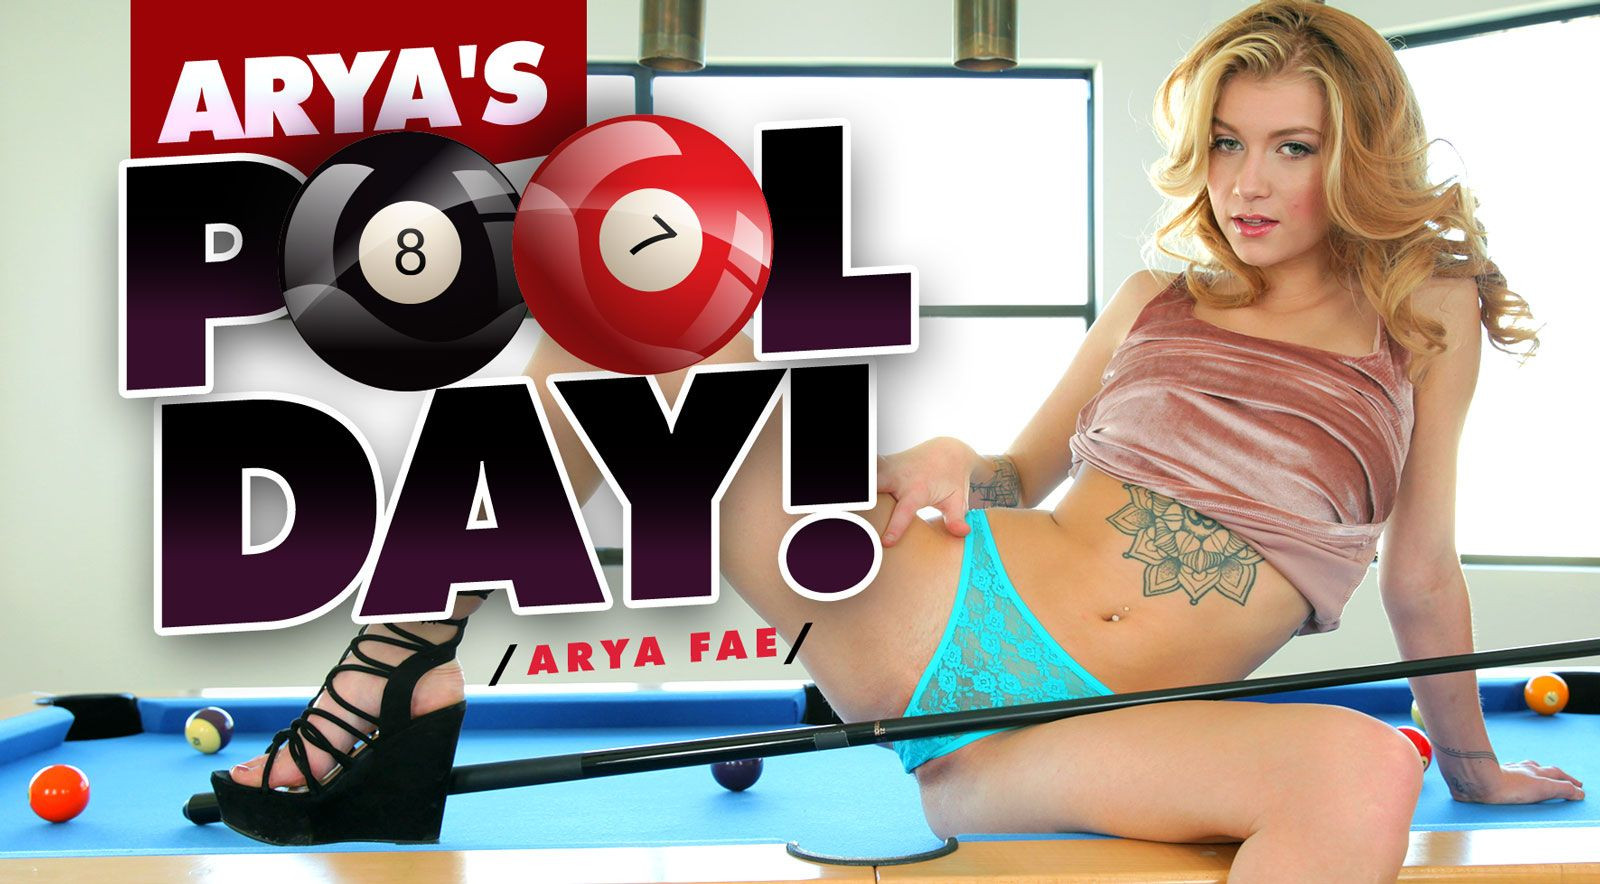 Arya's Pool Day! Arya Fae Slideshow